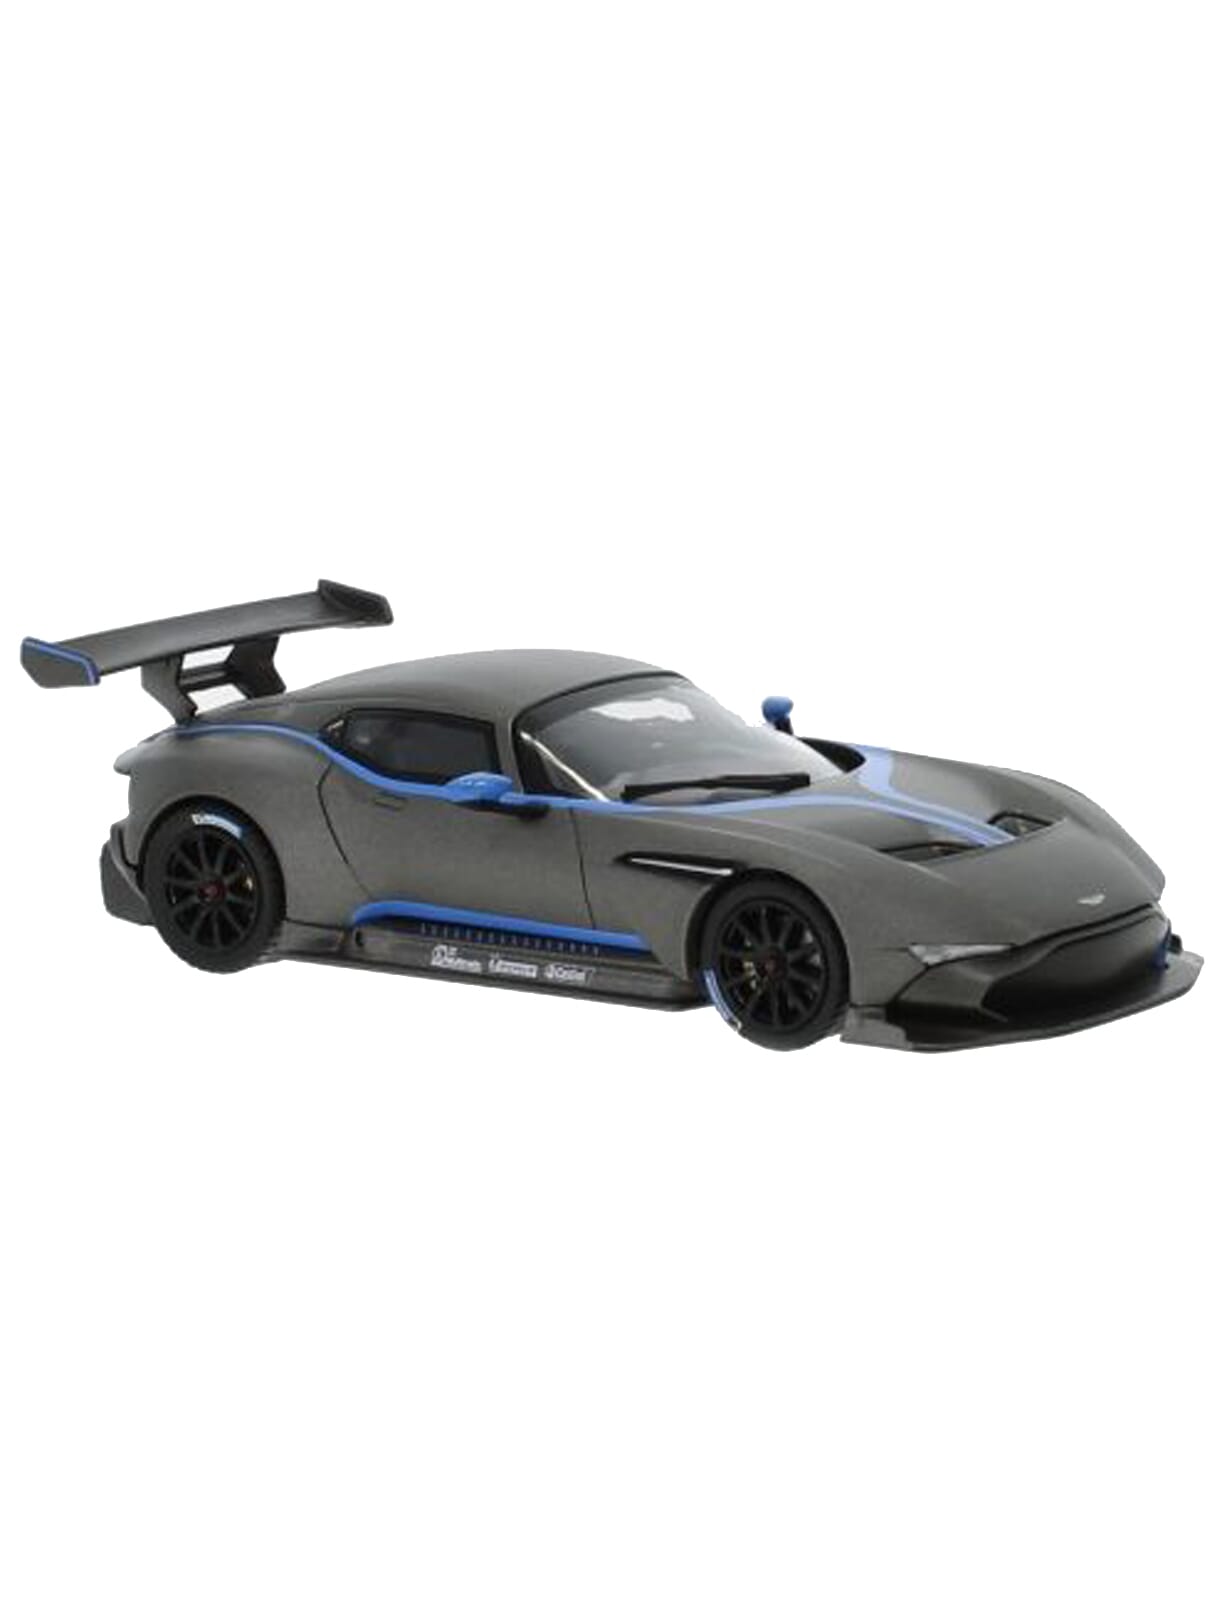 Aston Martin Vulcan 2015-1:43 IXO Supercars Diecast Modellauto Miniatur S25 